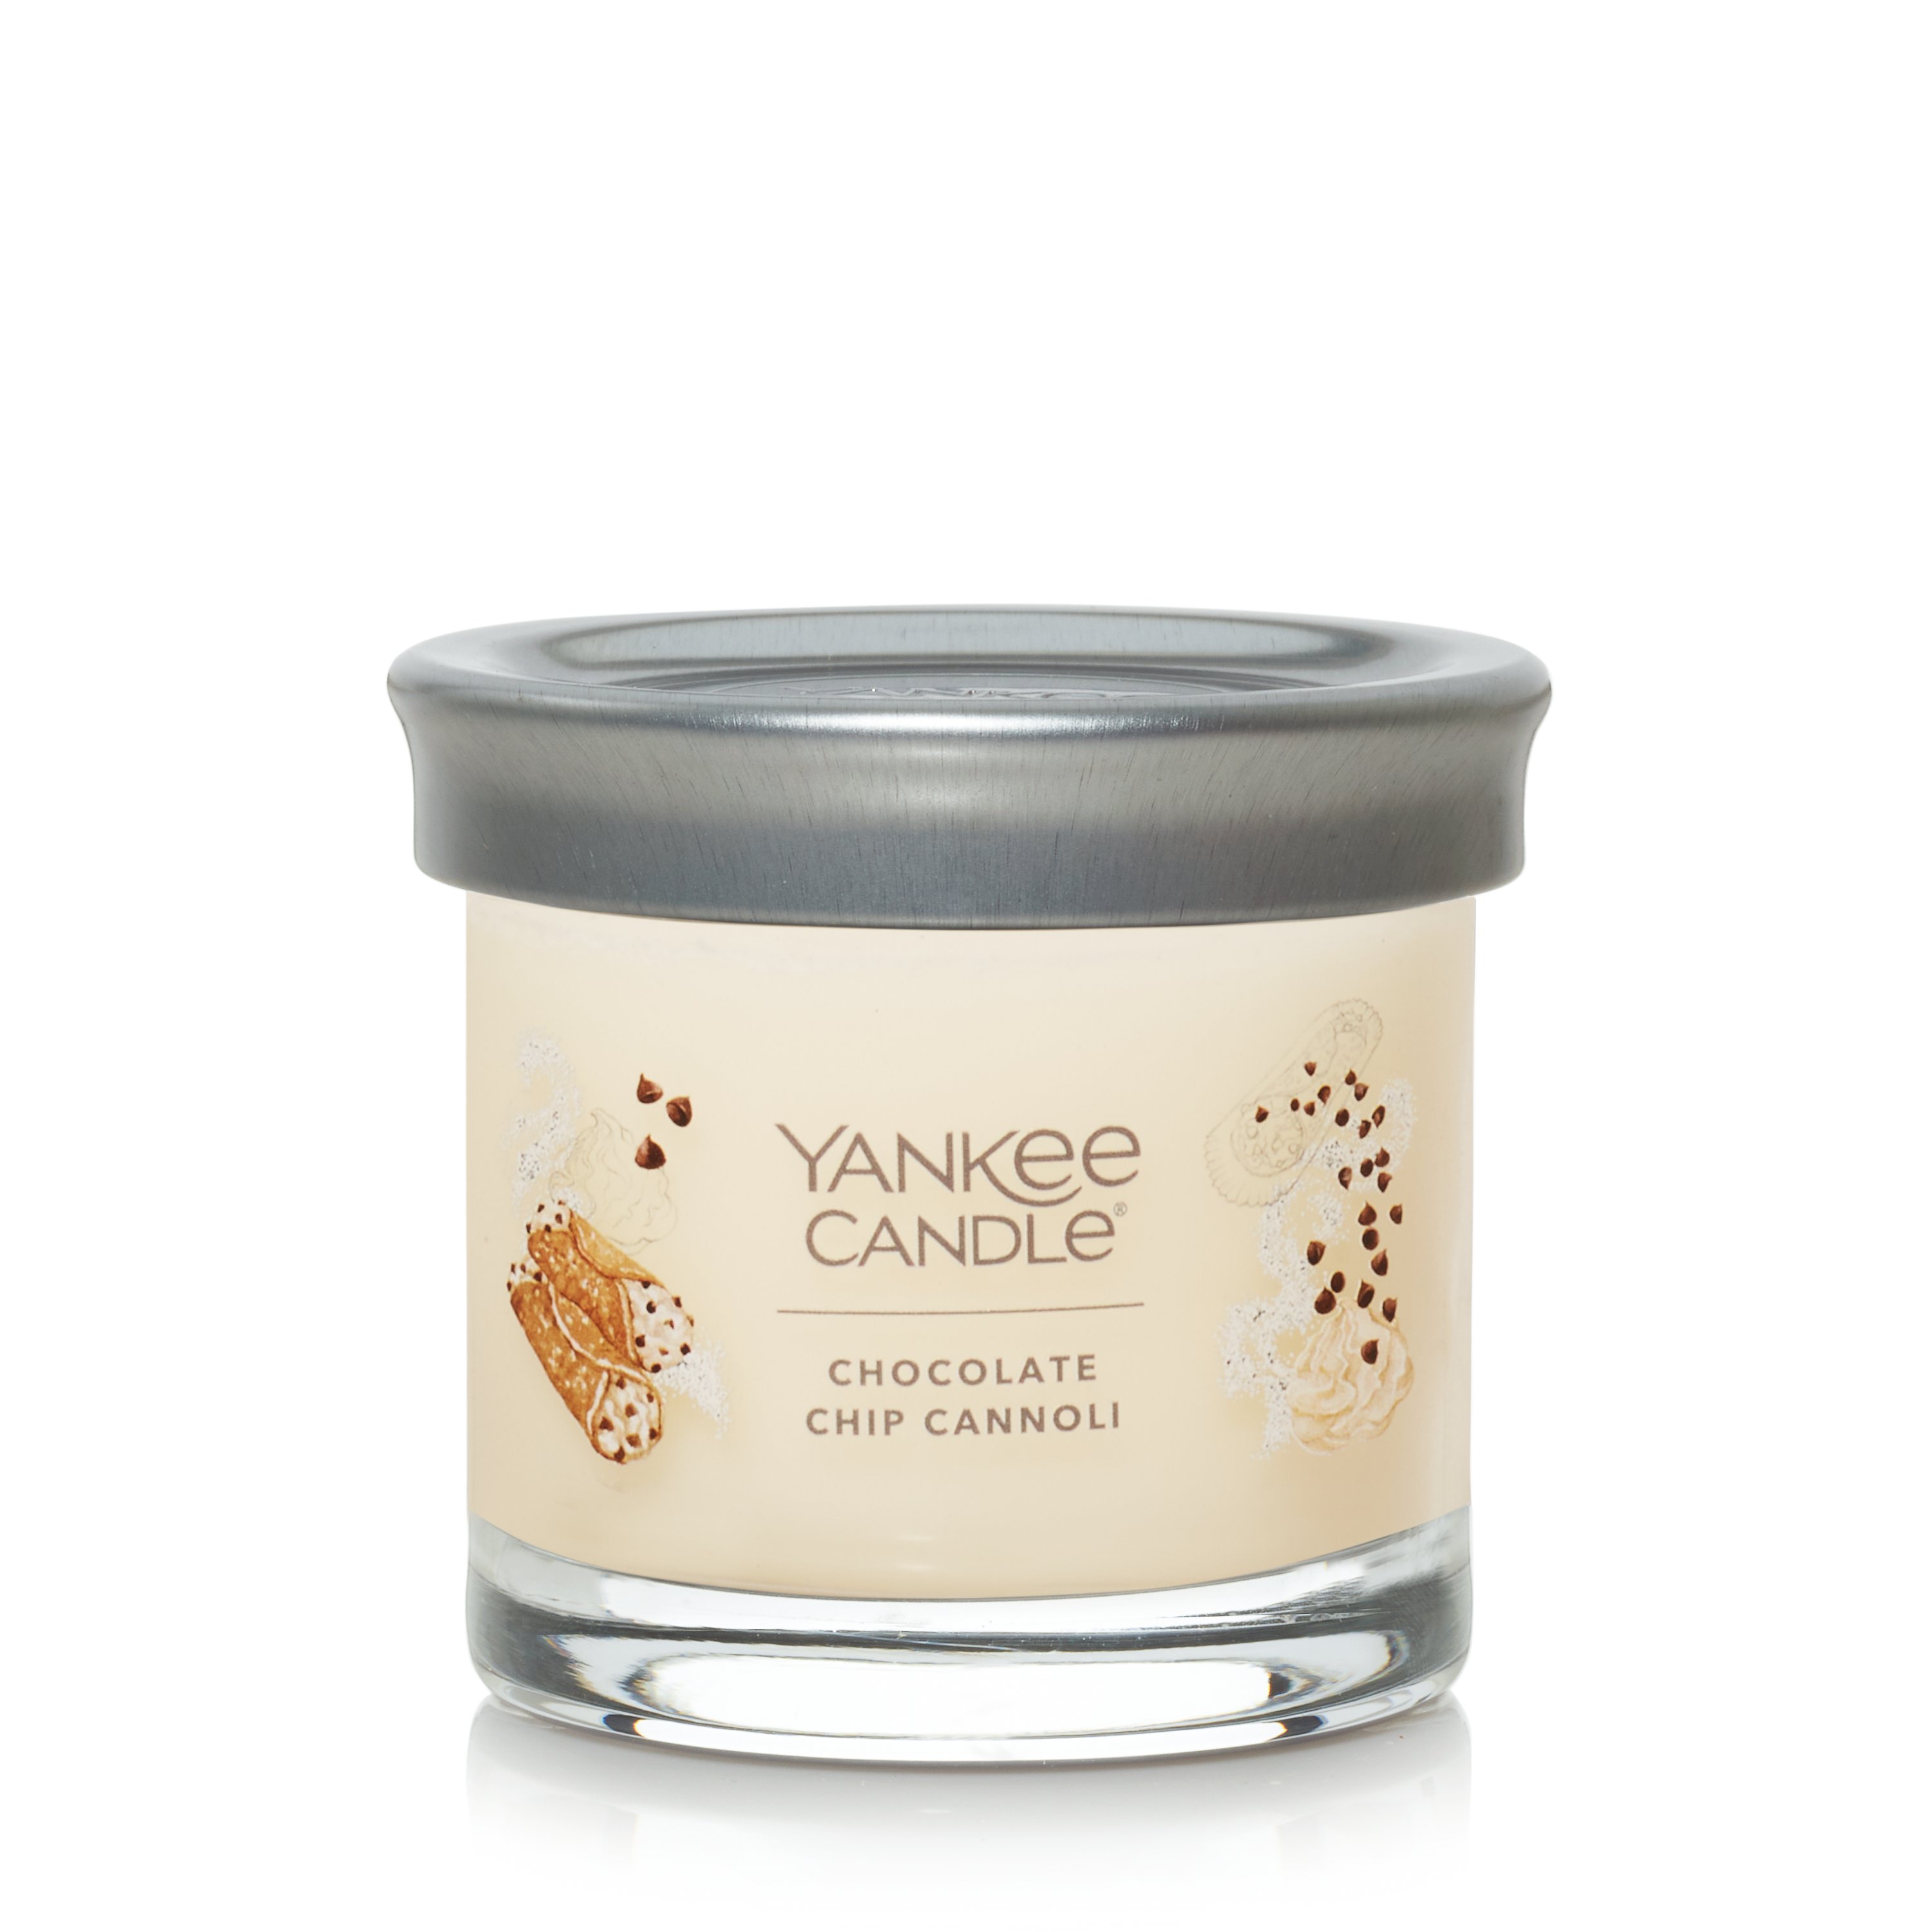 Yankee Candle Chocolate Chip Cannoli 20-oz. Candle Jar